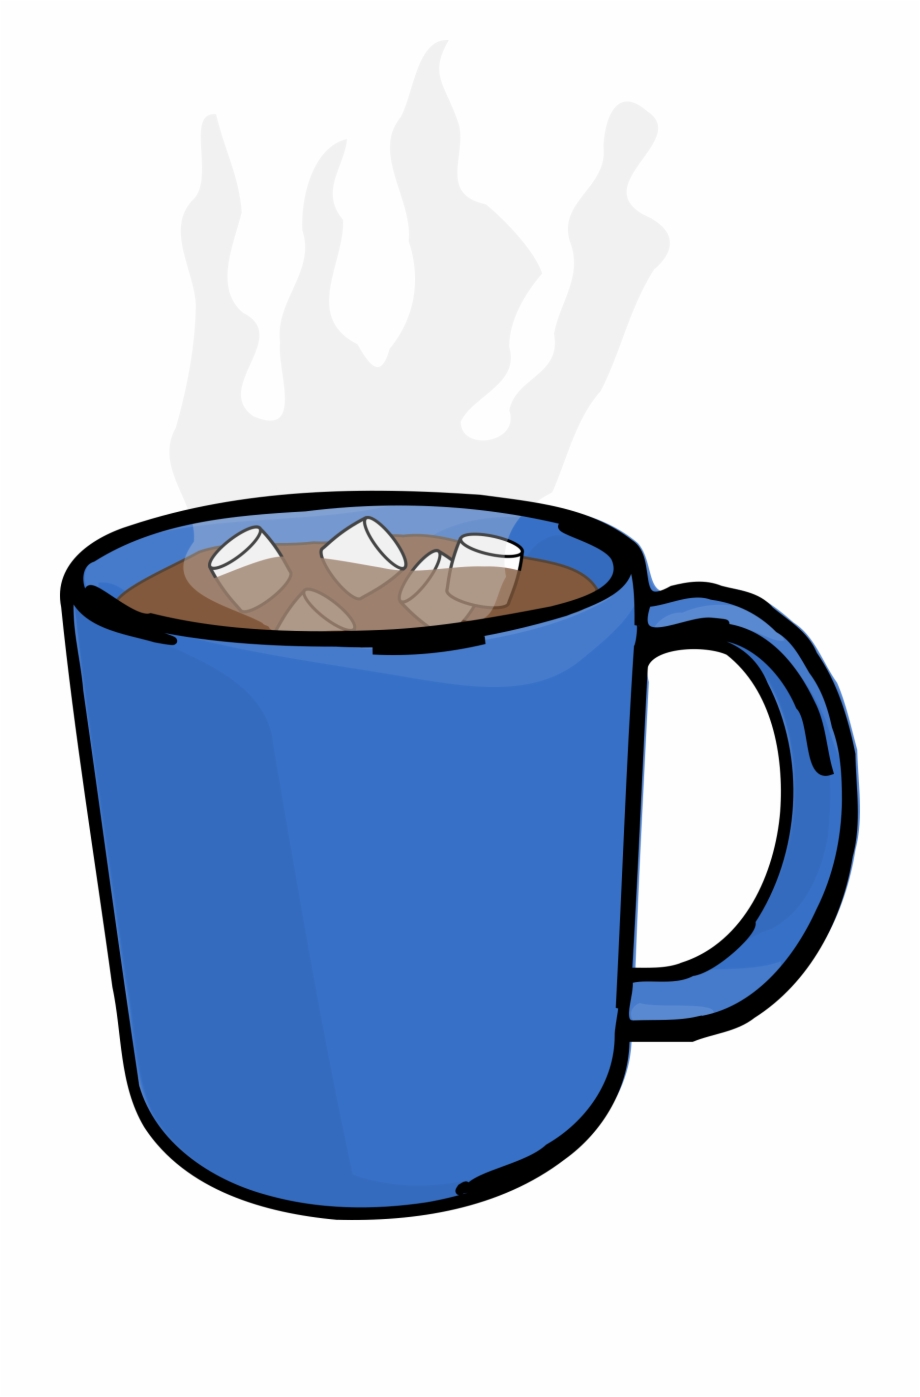 Hot chocolate mug.